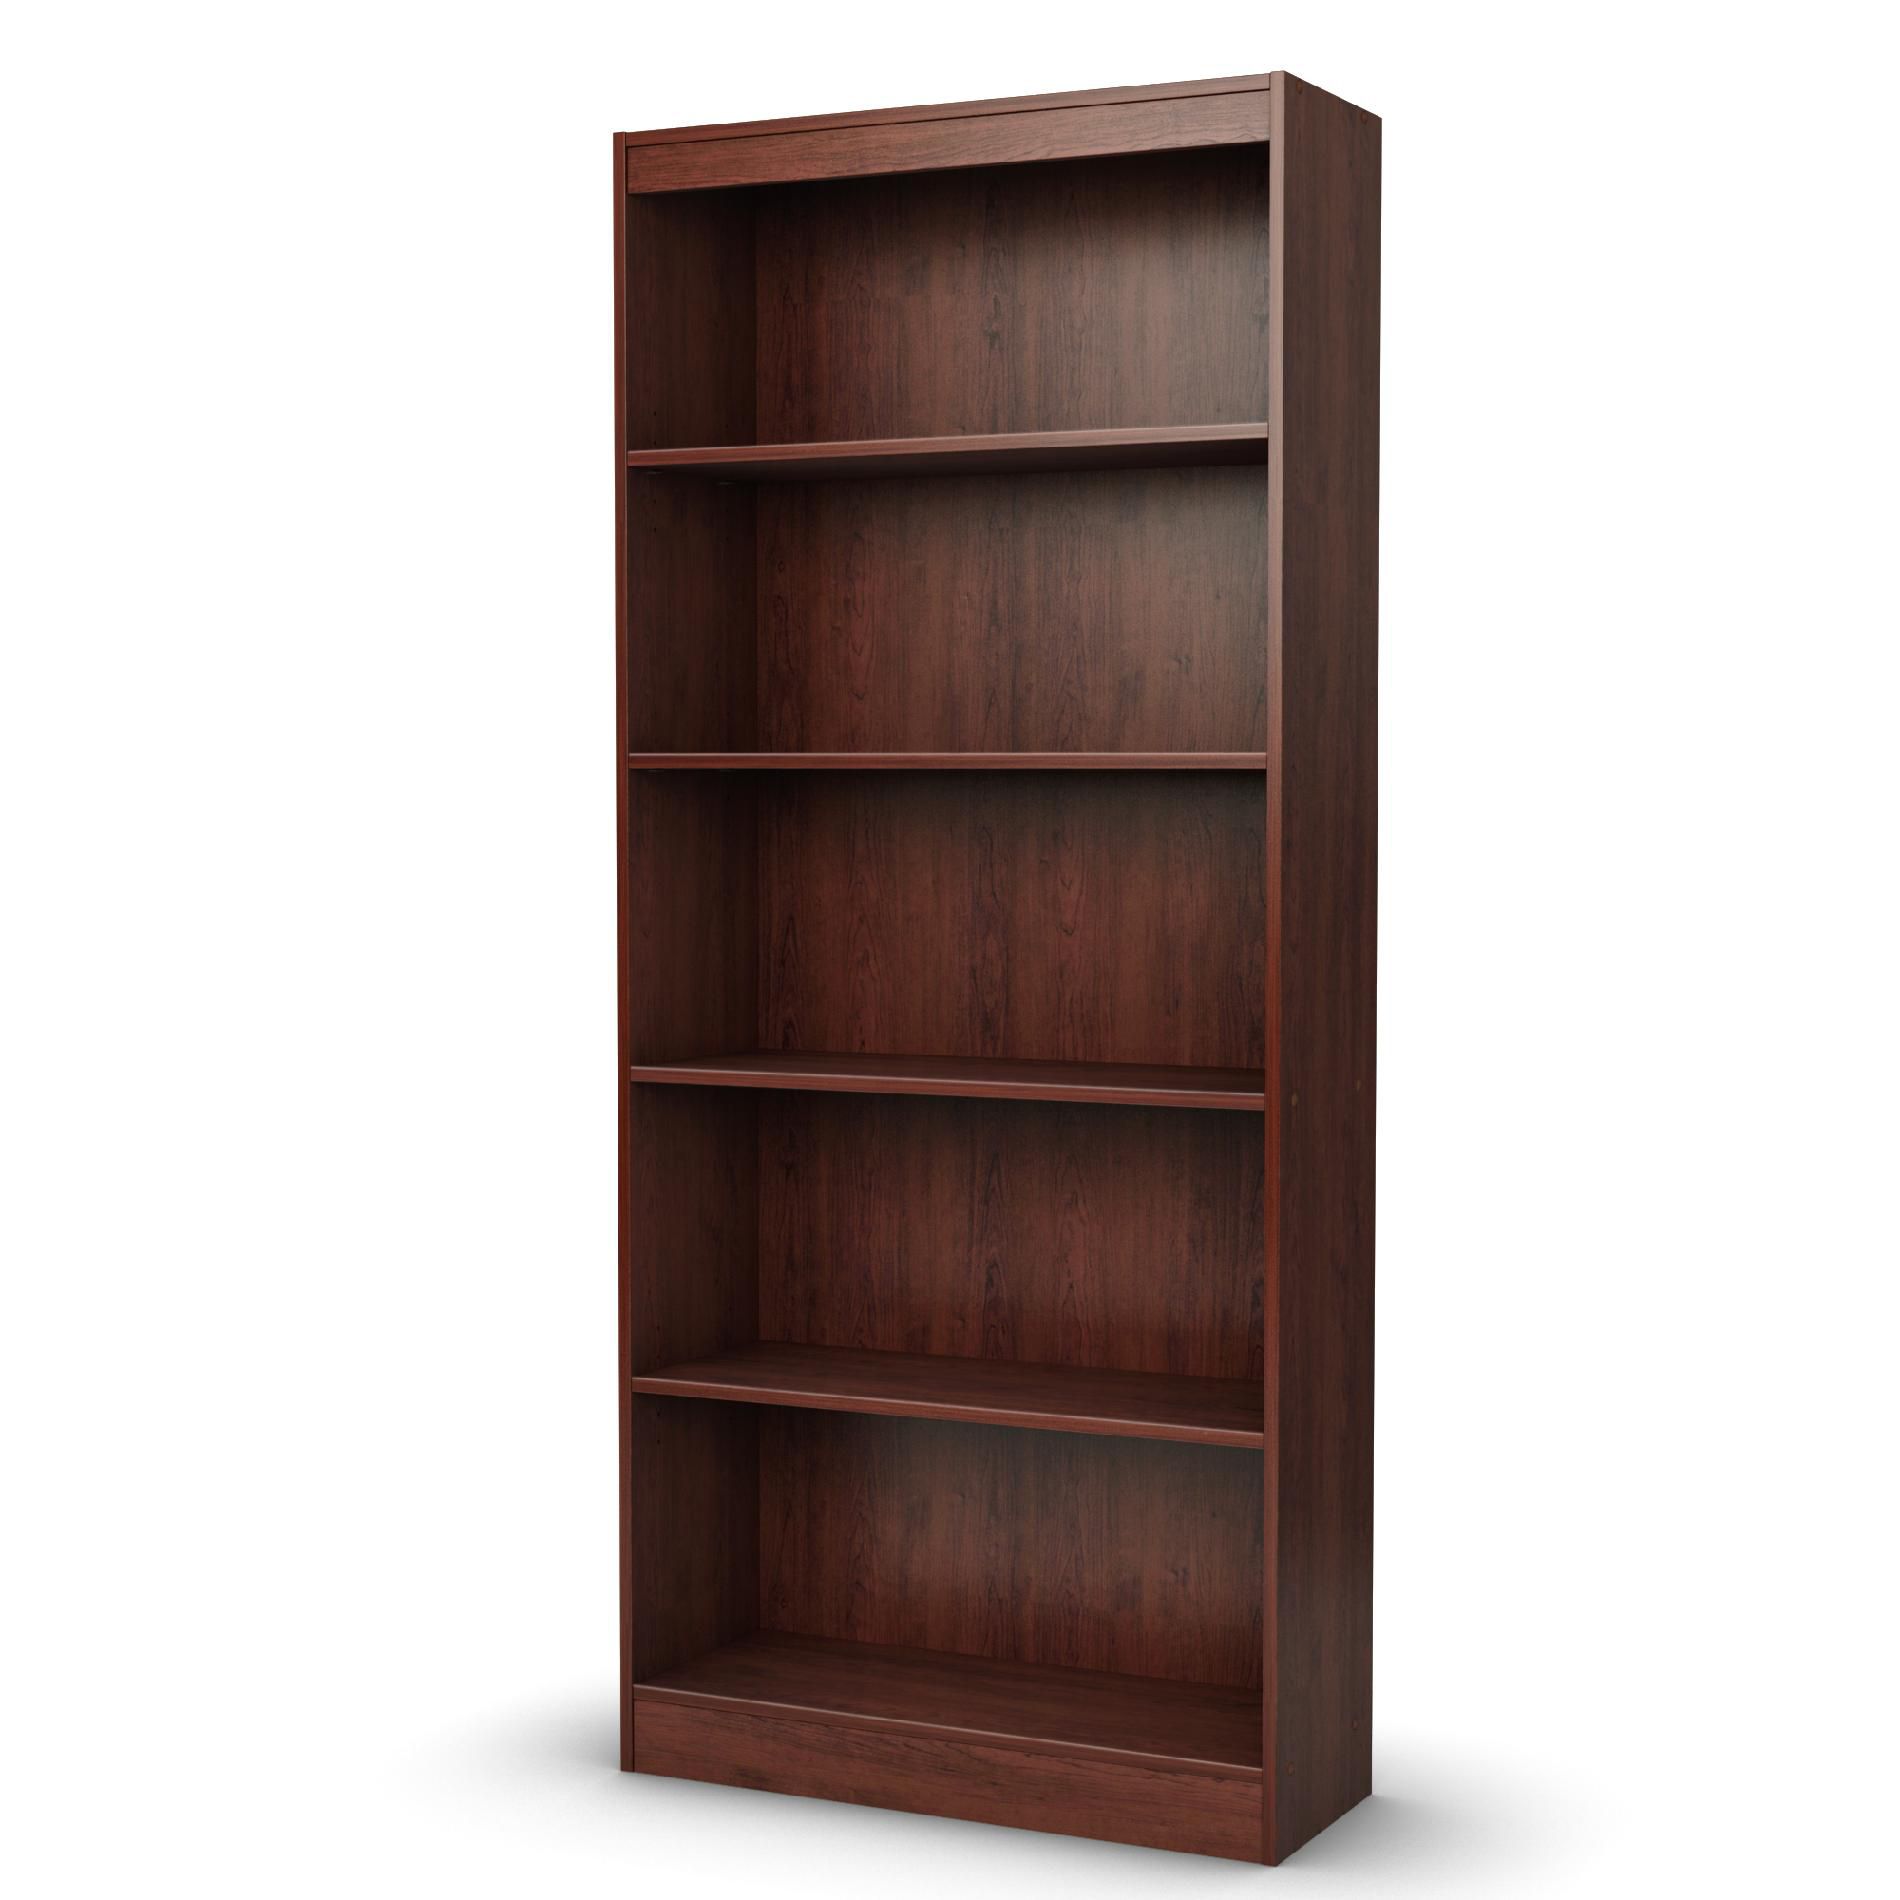 Sauder - 51200-000 - Beginnings 5 Shelf Wood Bookcase, Cinnamon Cherry 